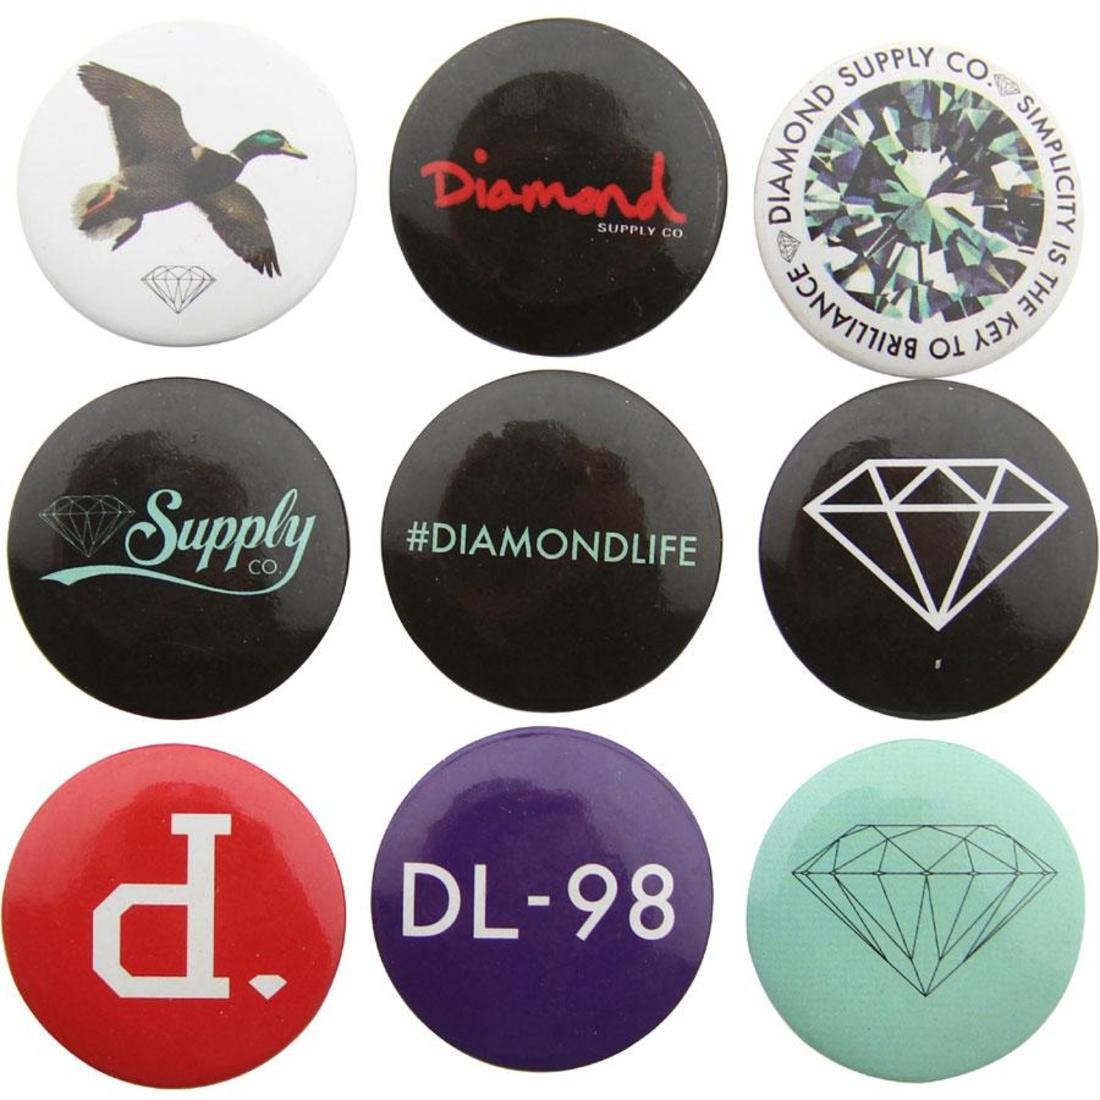 Diamond Supply Co Diamond Button Pack (assorted)